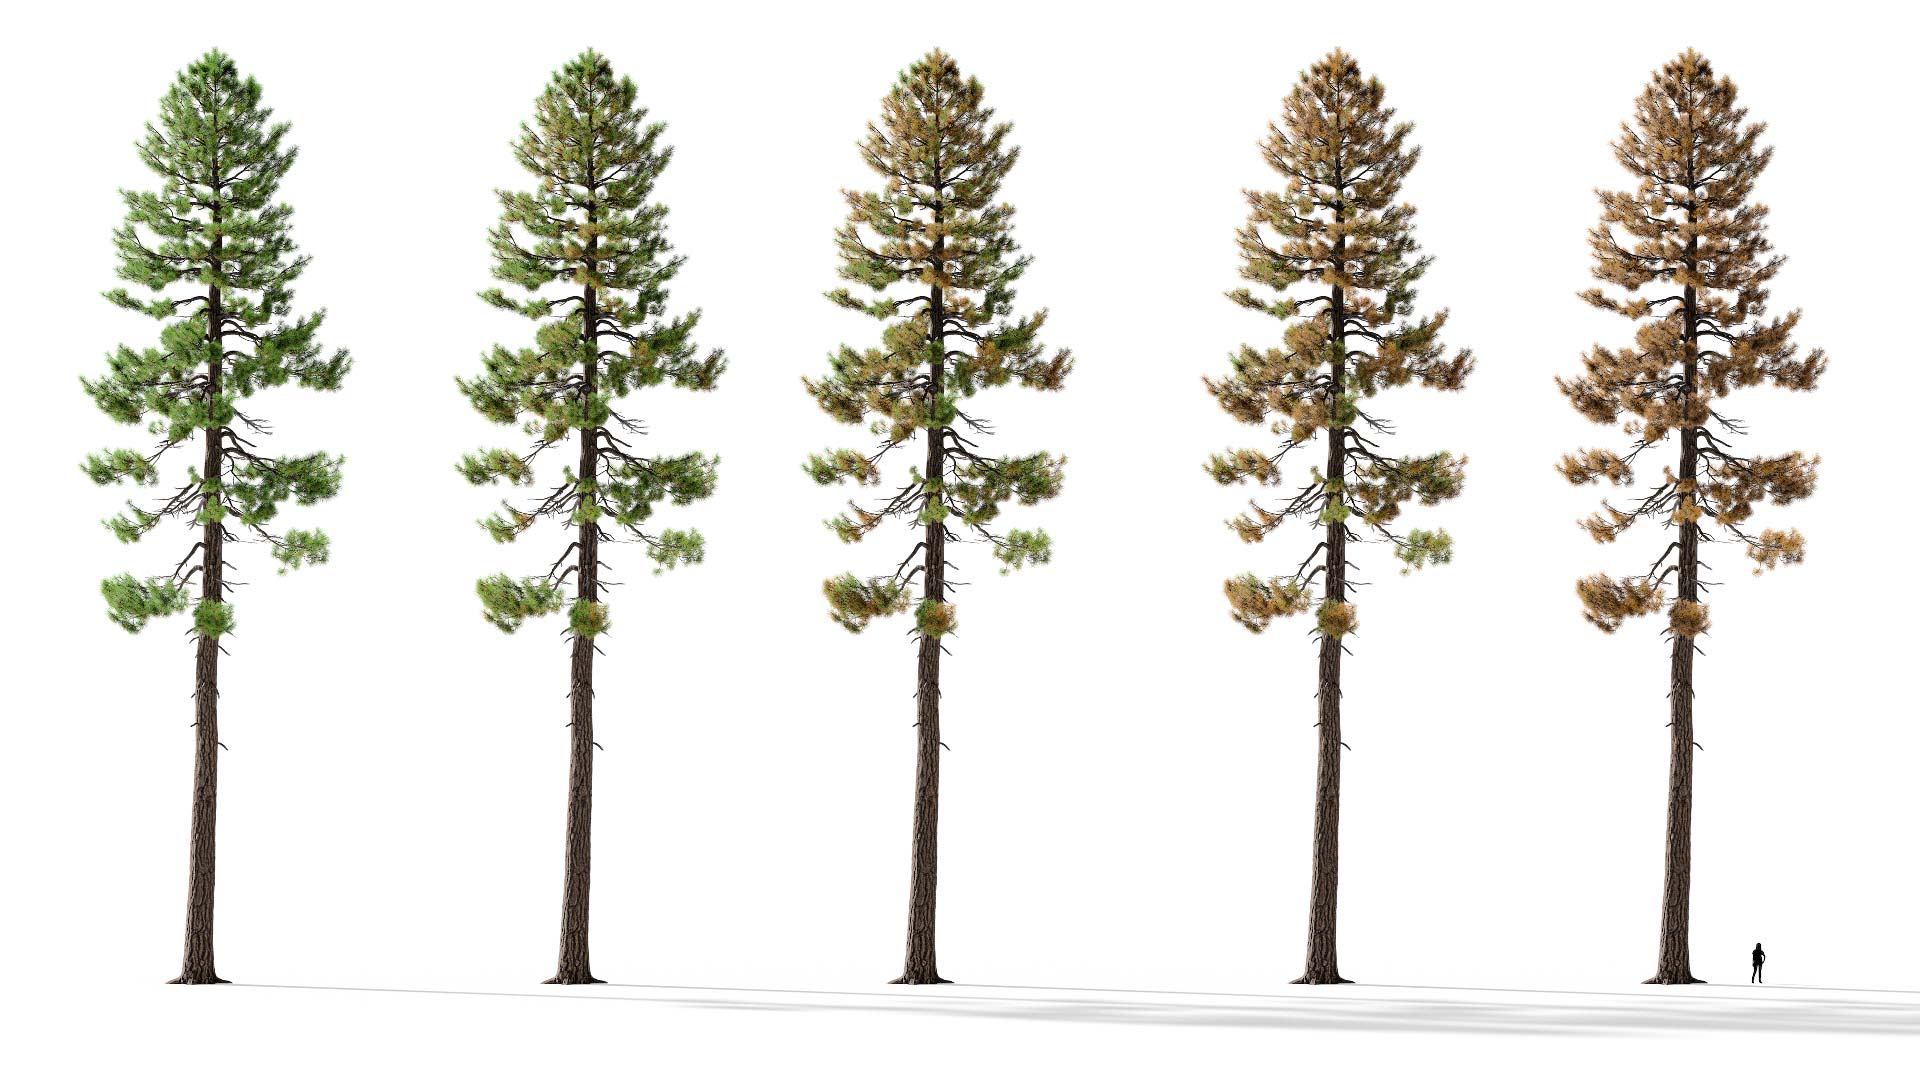 3D model of the Ponderosa pine forest Pinus ponderosa forest health variations